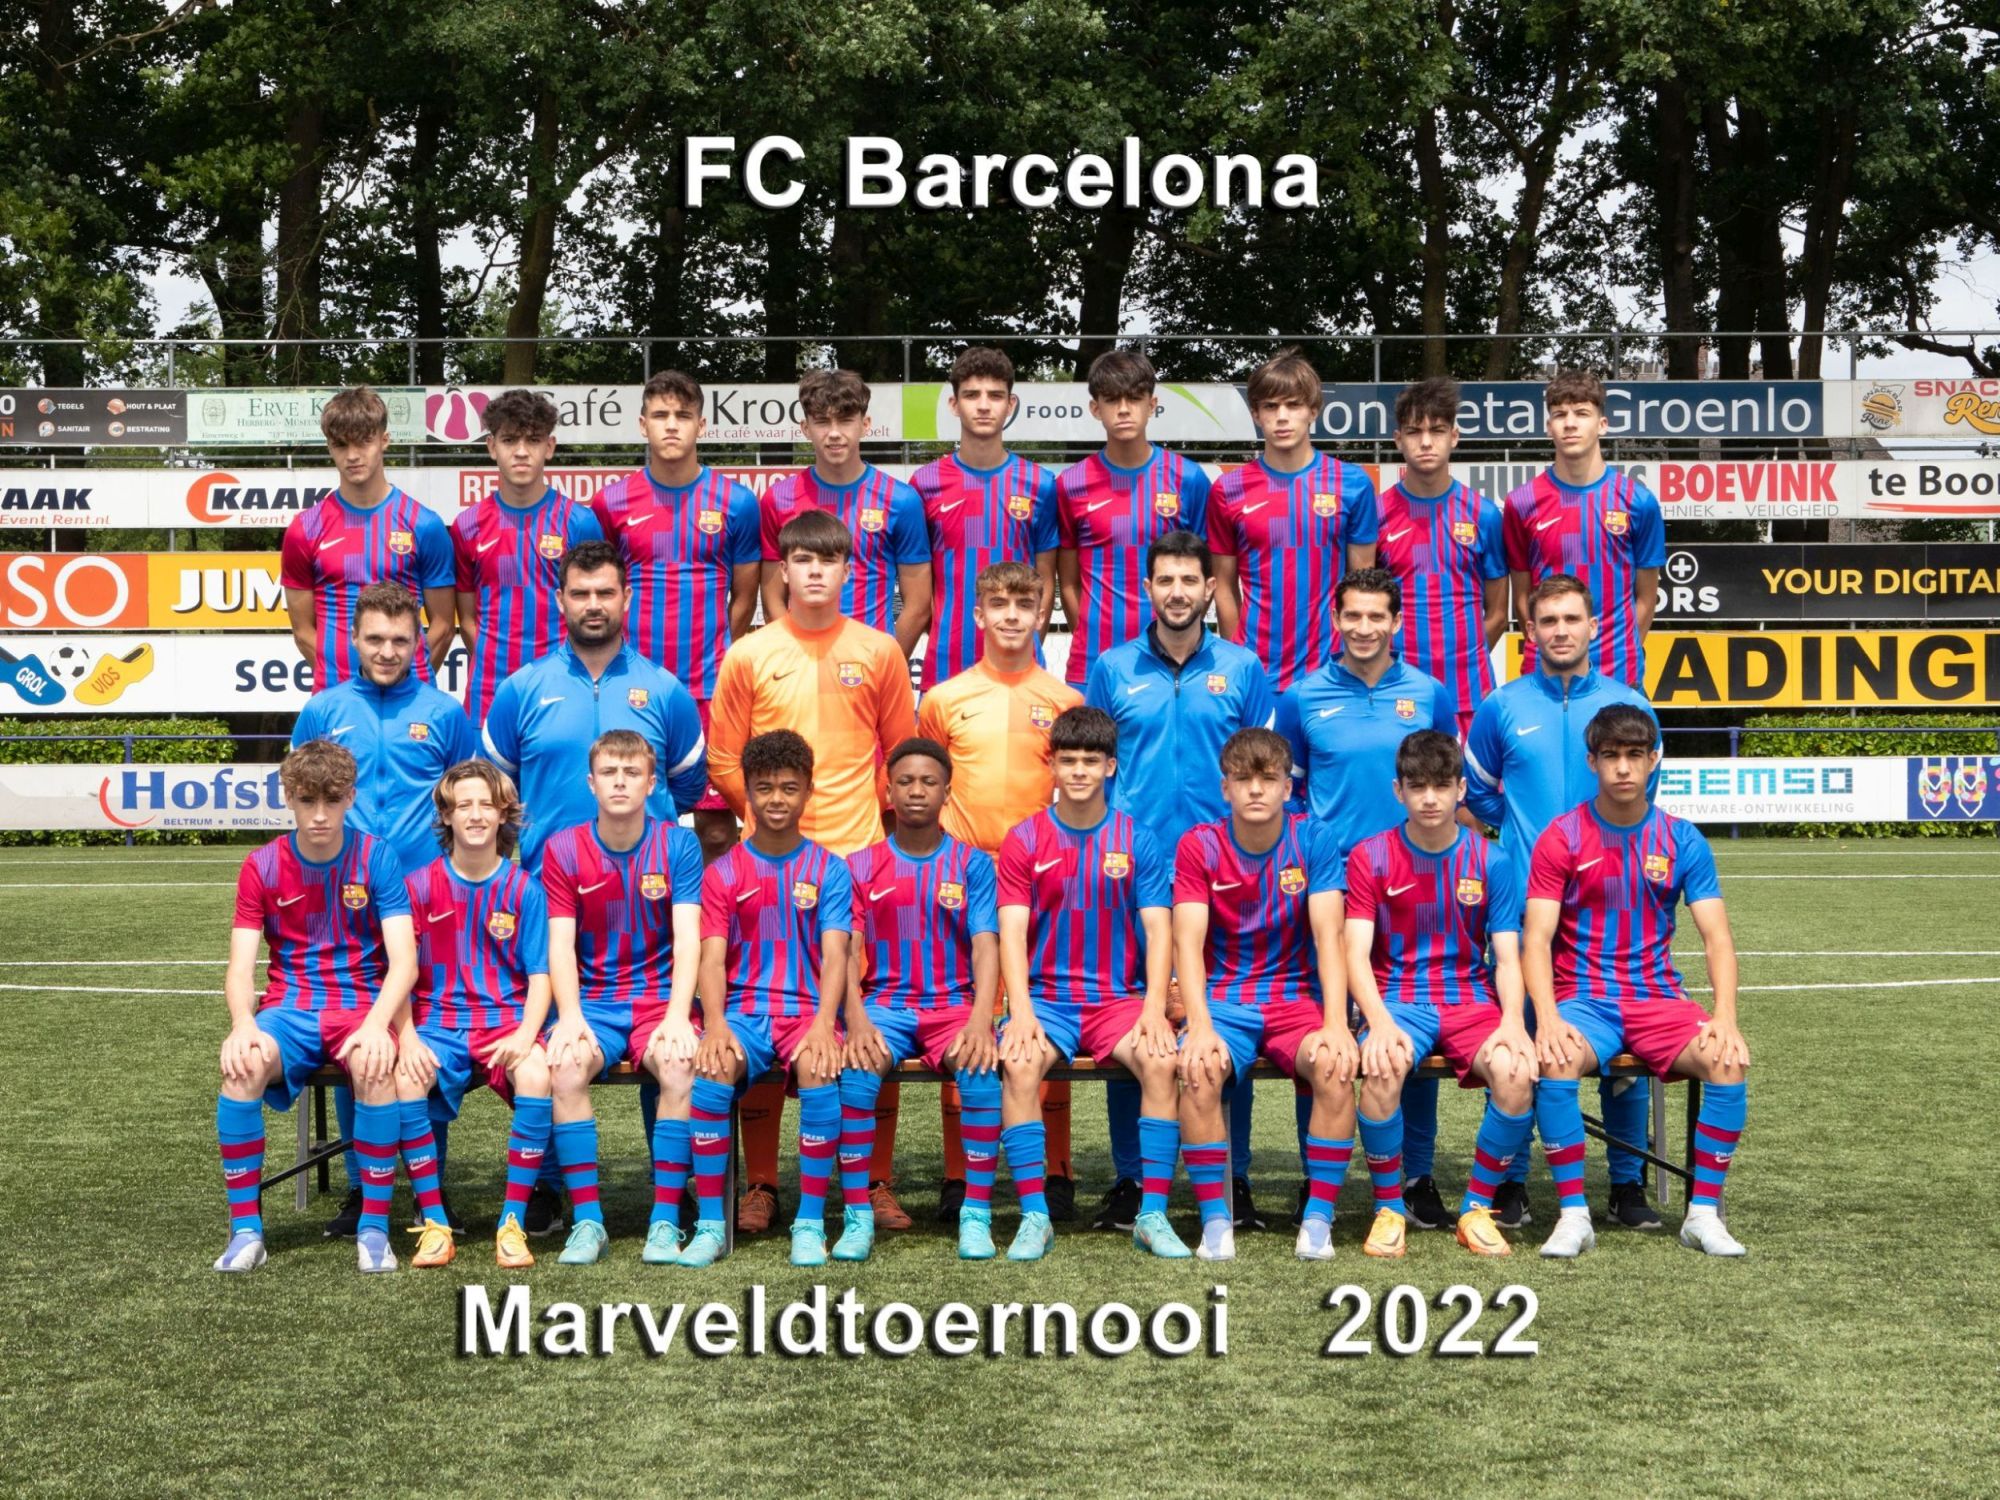 Marveld Tournament 2022 - Team FC Barcelona